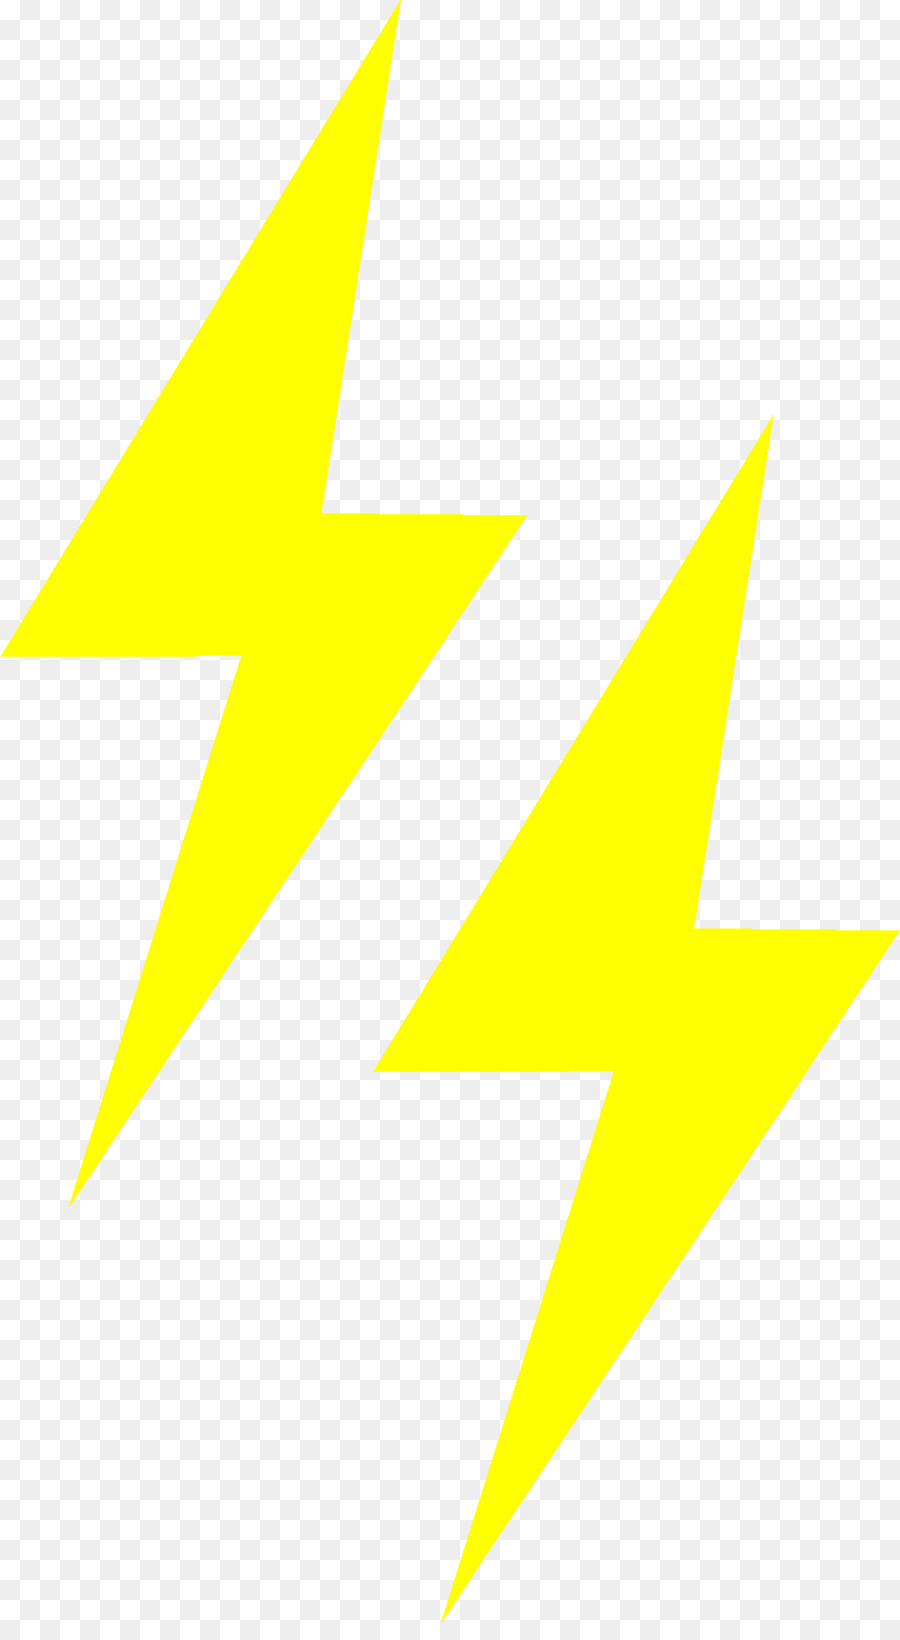 Lightning Rainbow Dash Cutie Mark Crusaders Thunder - lightning png download - 954*1719 - Free Transparent Lightning png Download.